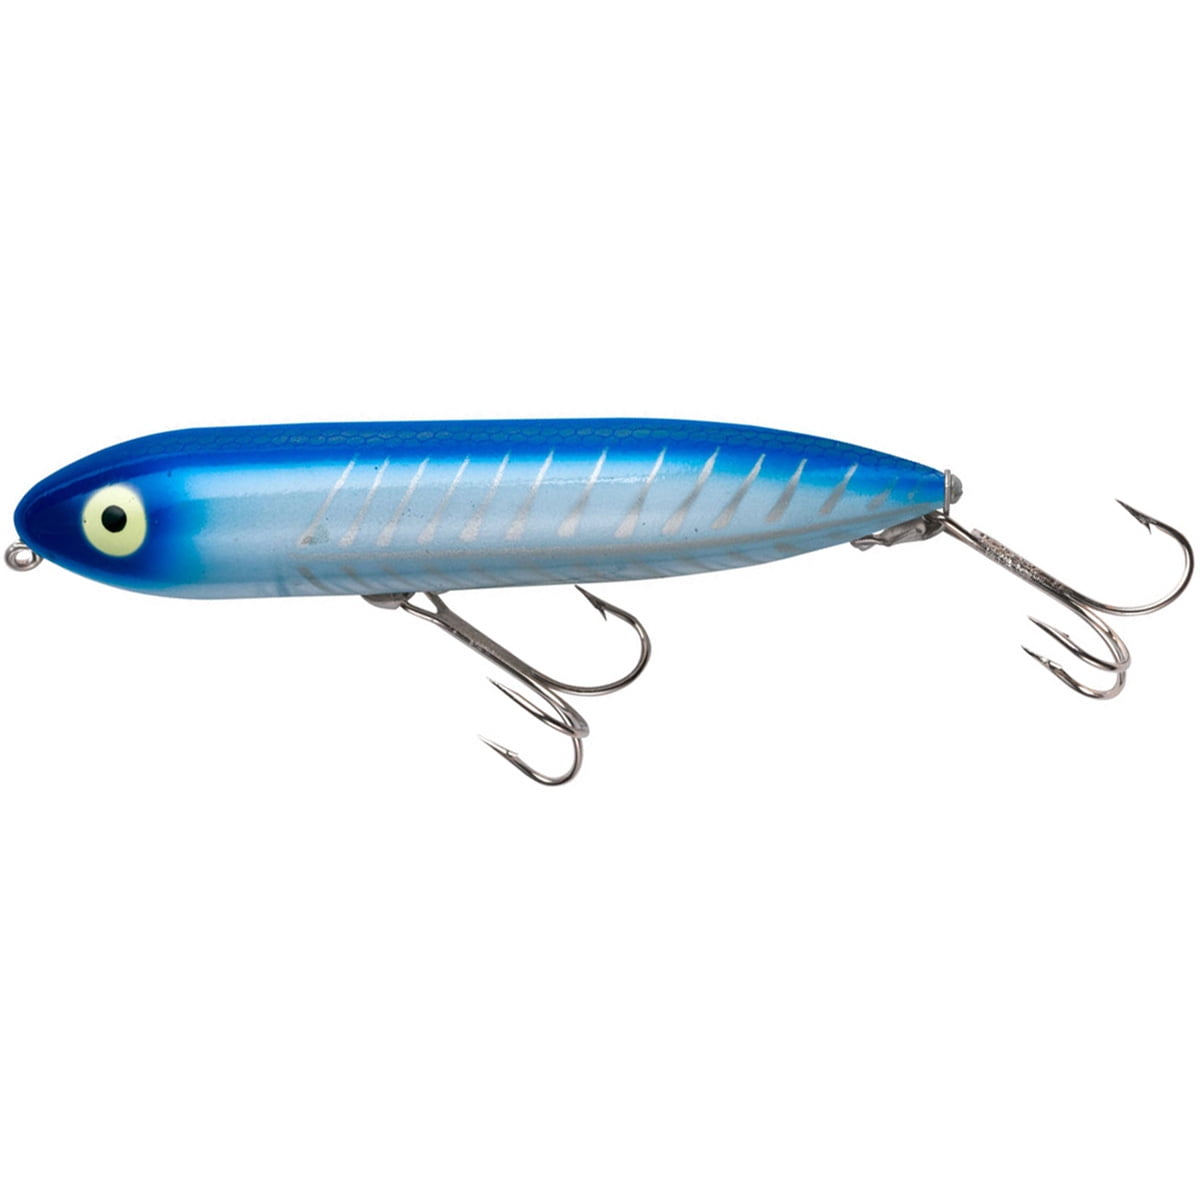 Heddon Zara Spook 3/4 oz Fishing Lure - Blue Shore Minnow